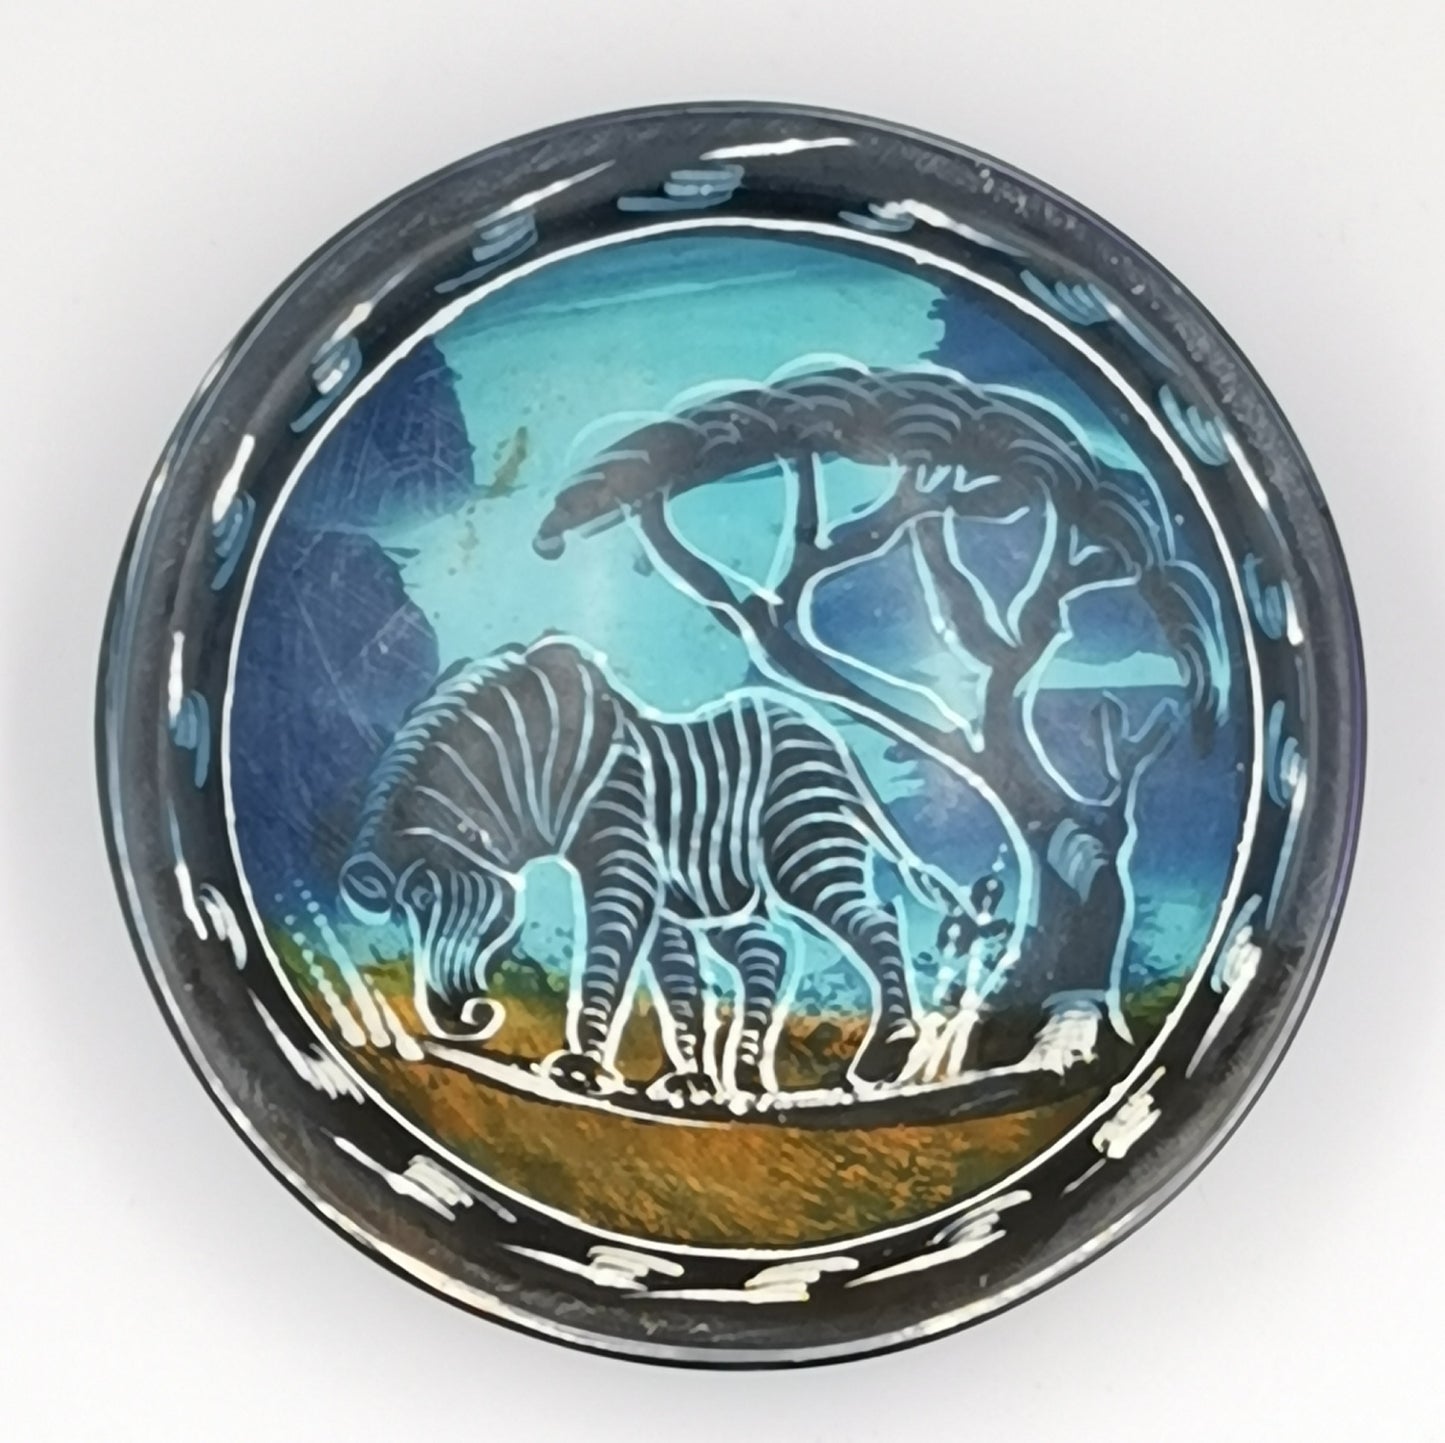 Zebra Soapstone Bowl - Small